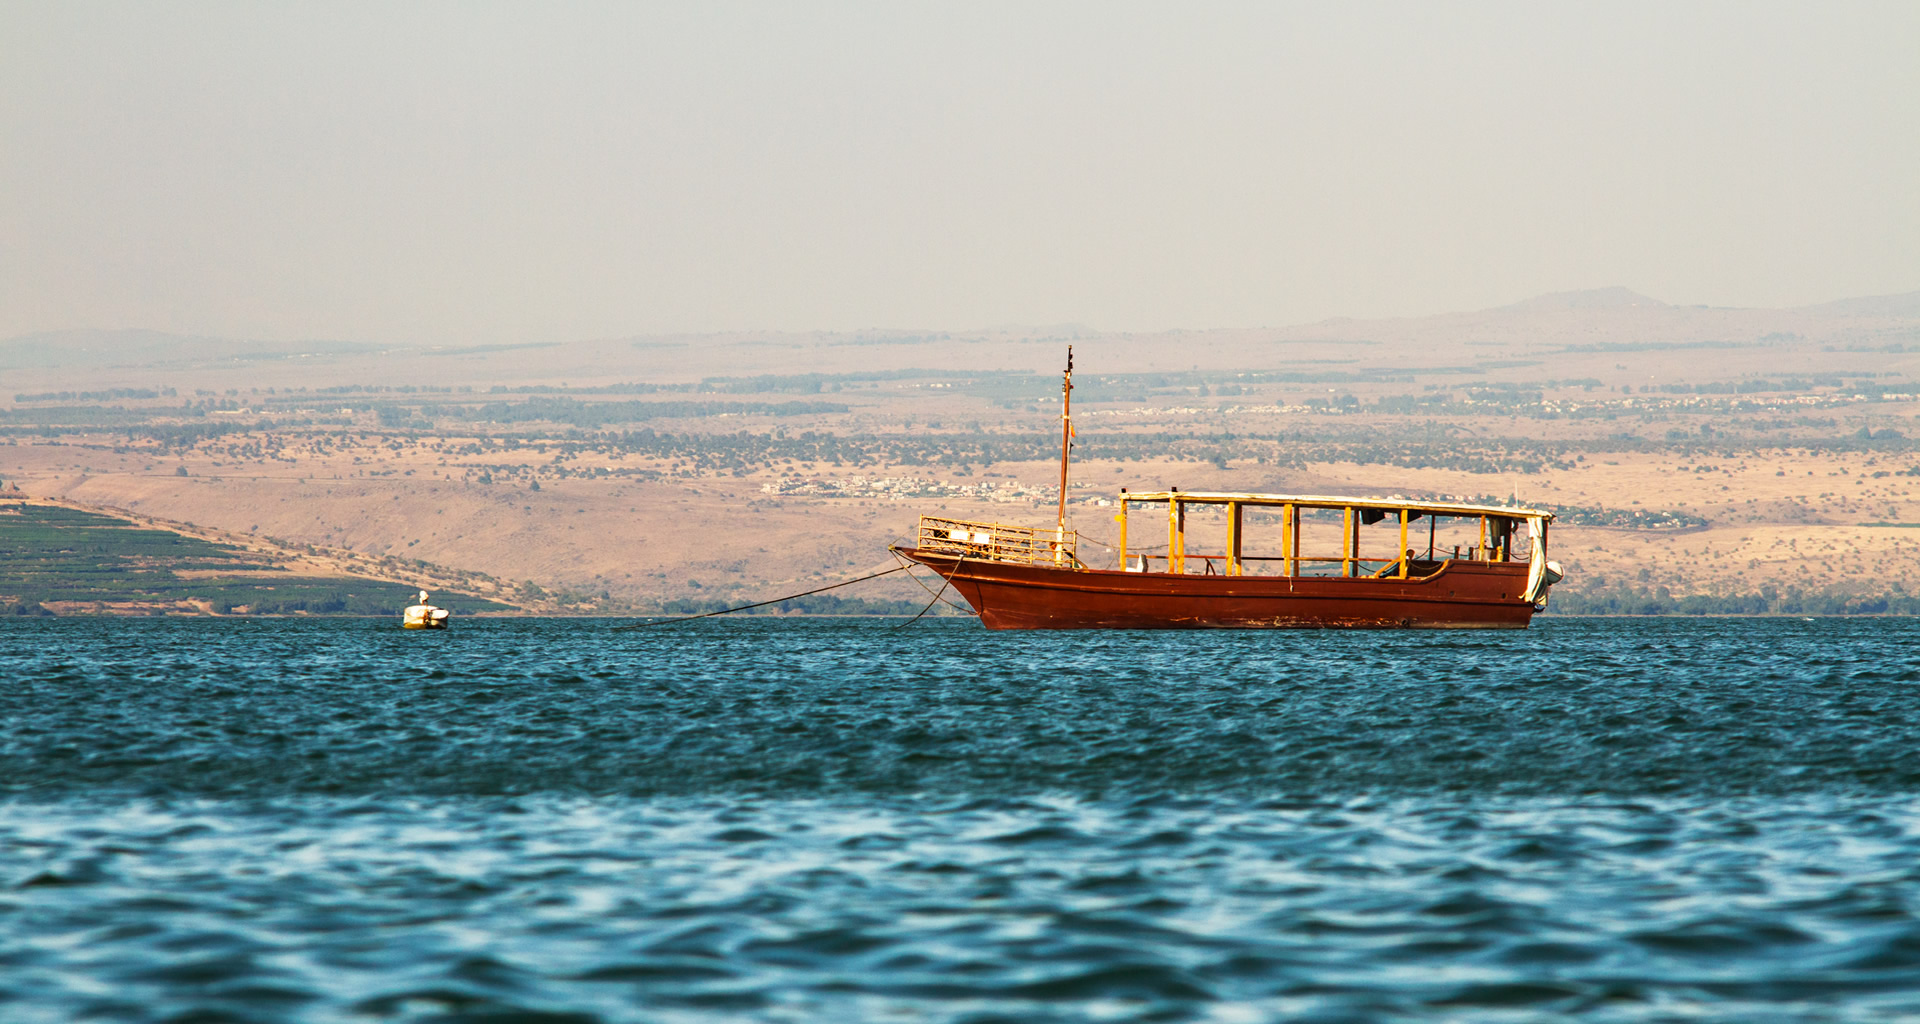 Part 4 - Sea of Galilee